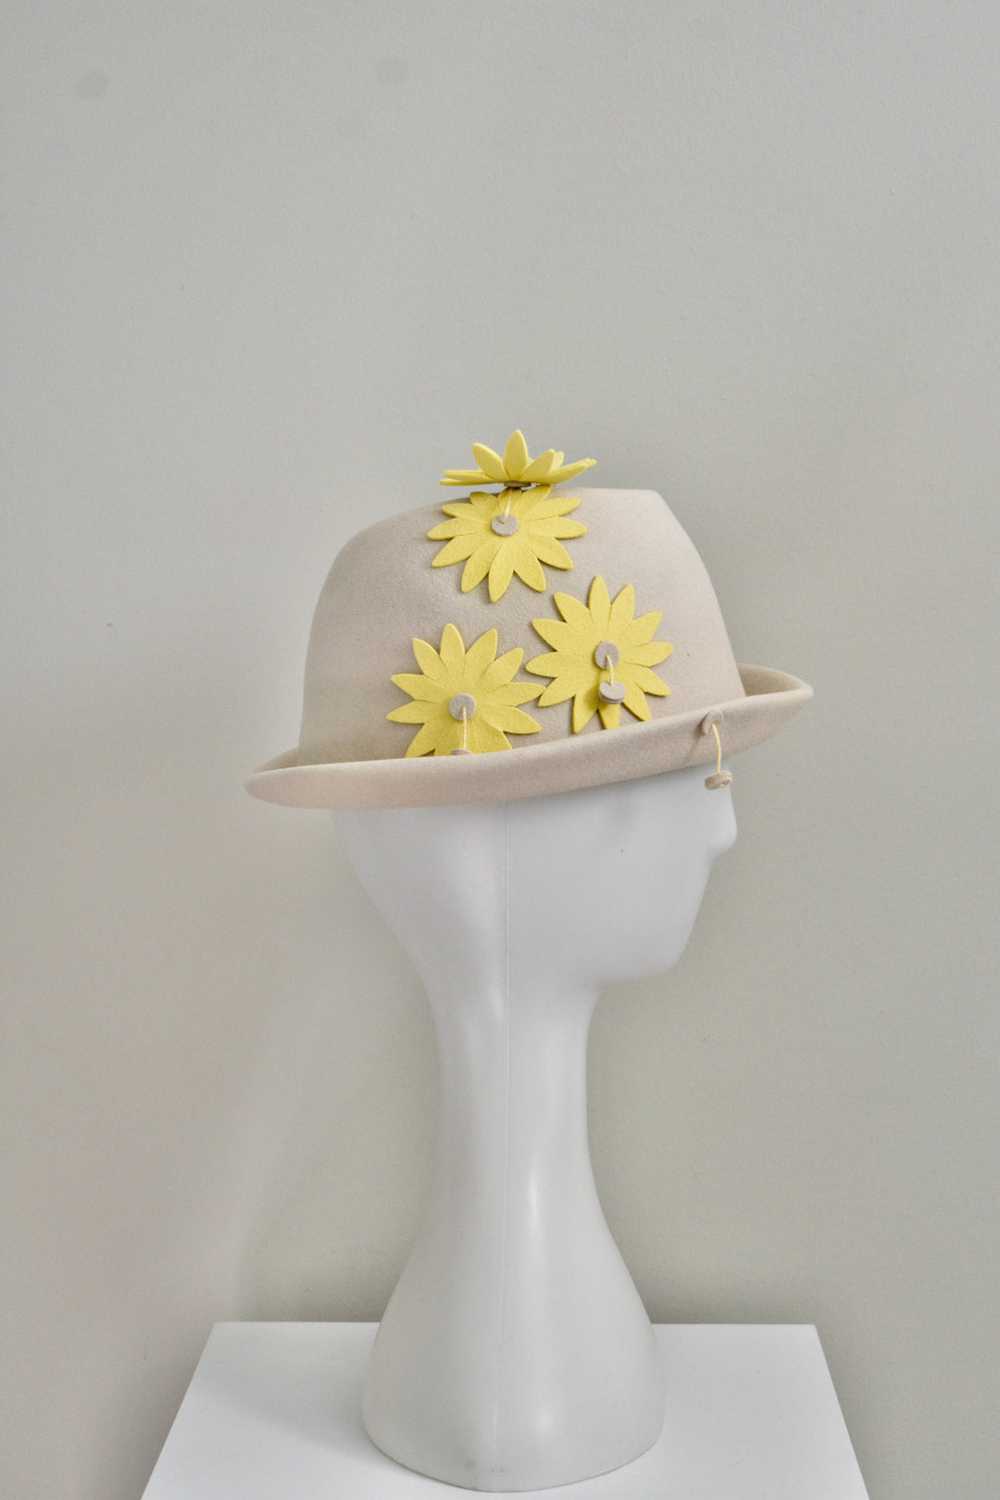 Vintage 1960s Adolfo II Daisy Hat - image 2